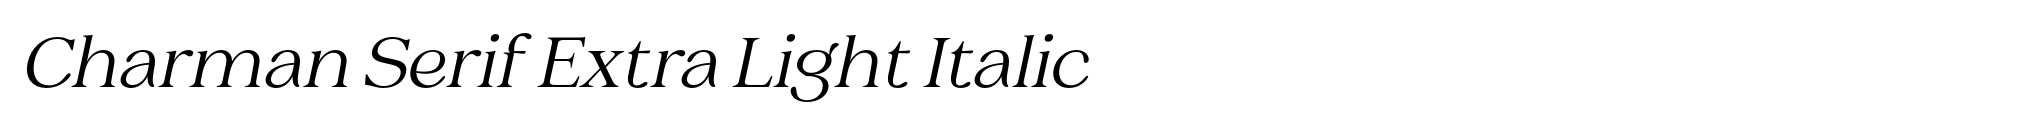 Charman Serif Extra Light Italic image